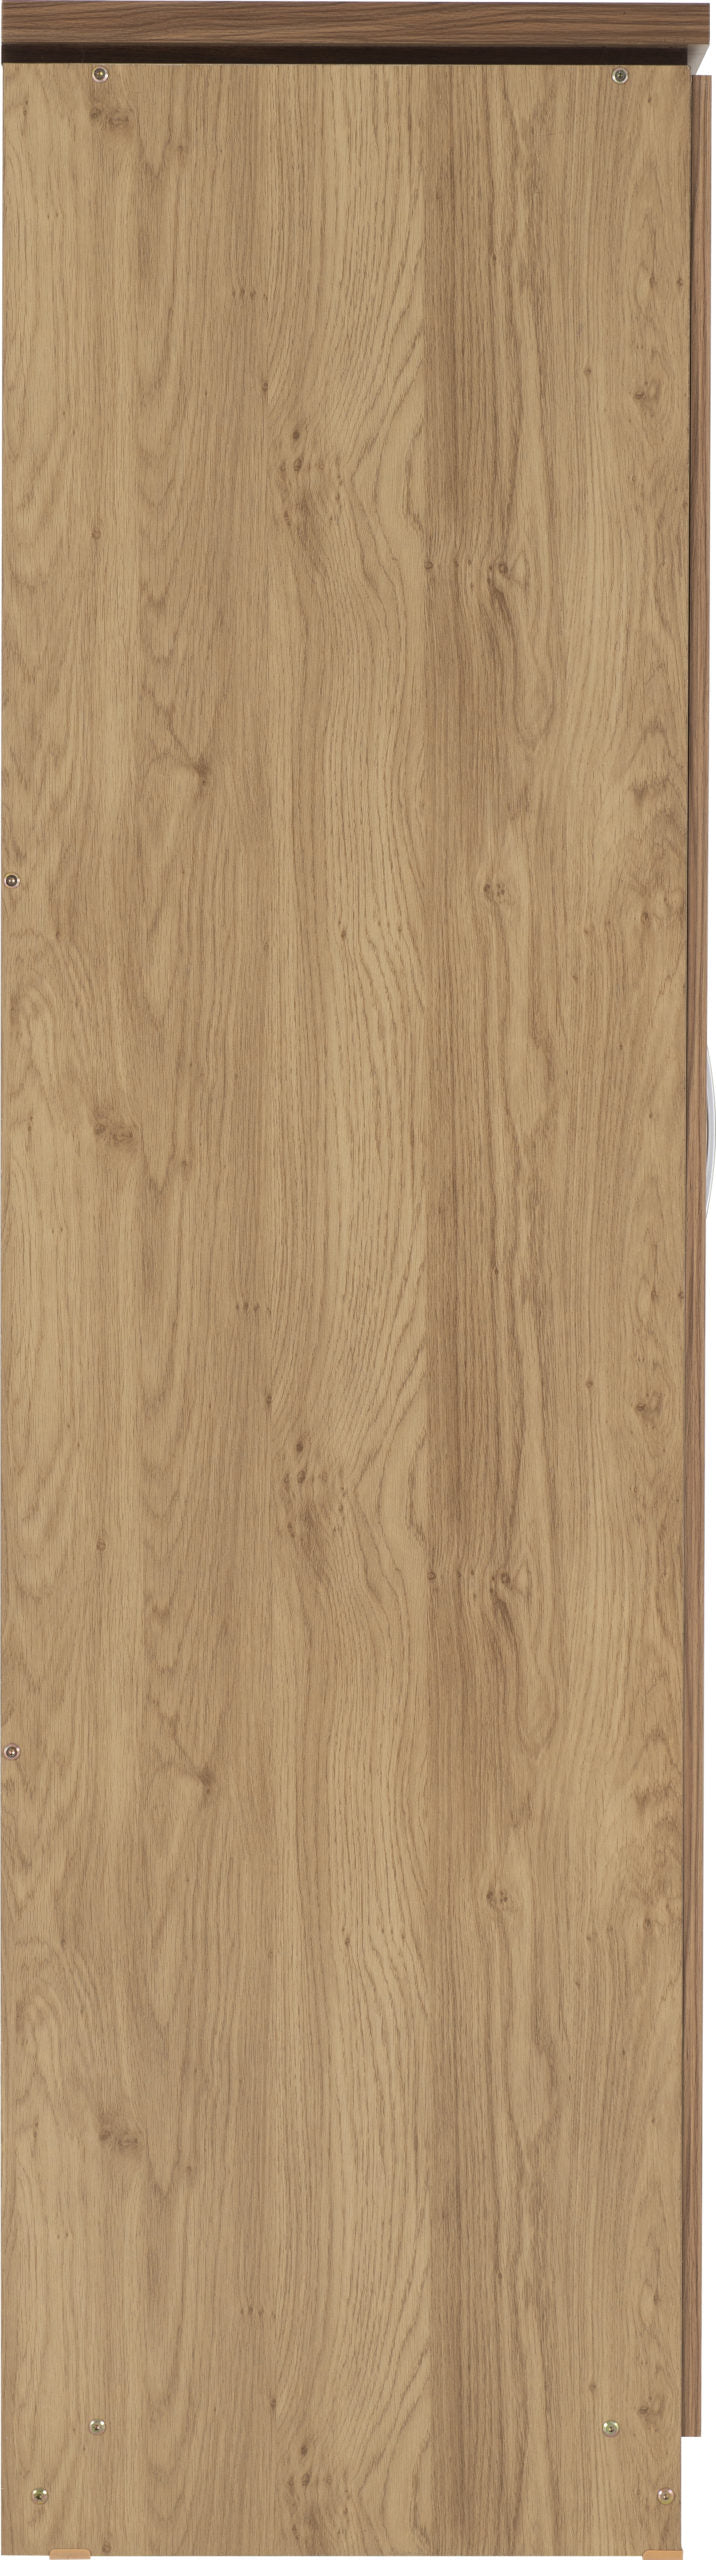 Charles 3 Door All Hanging Wardrobe - Oak Effect Veneer with Walnut Trim